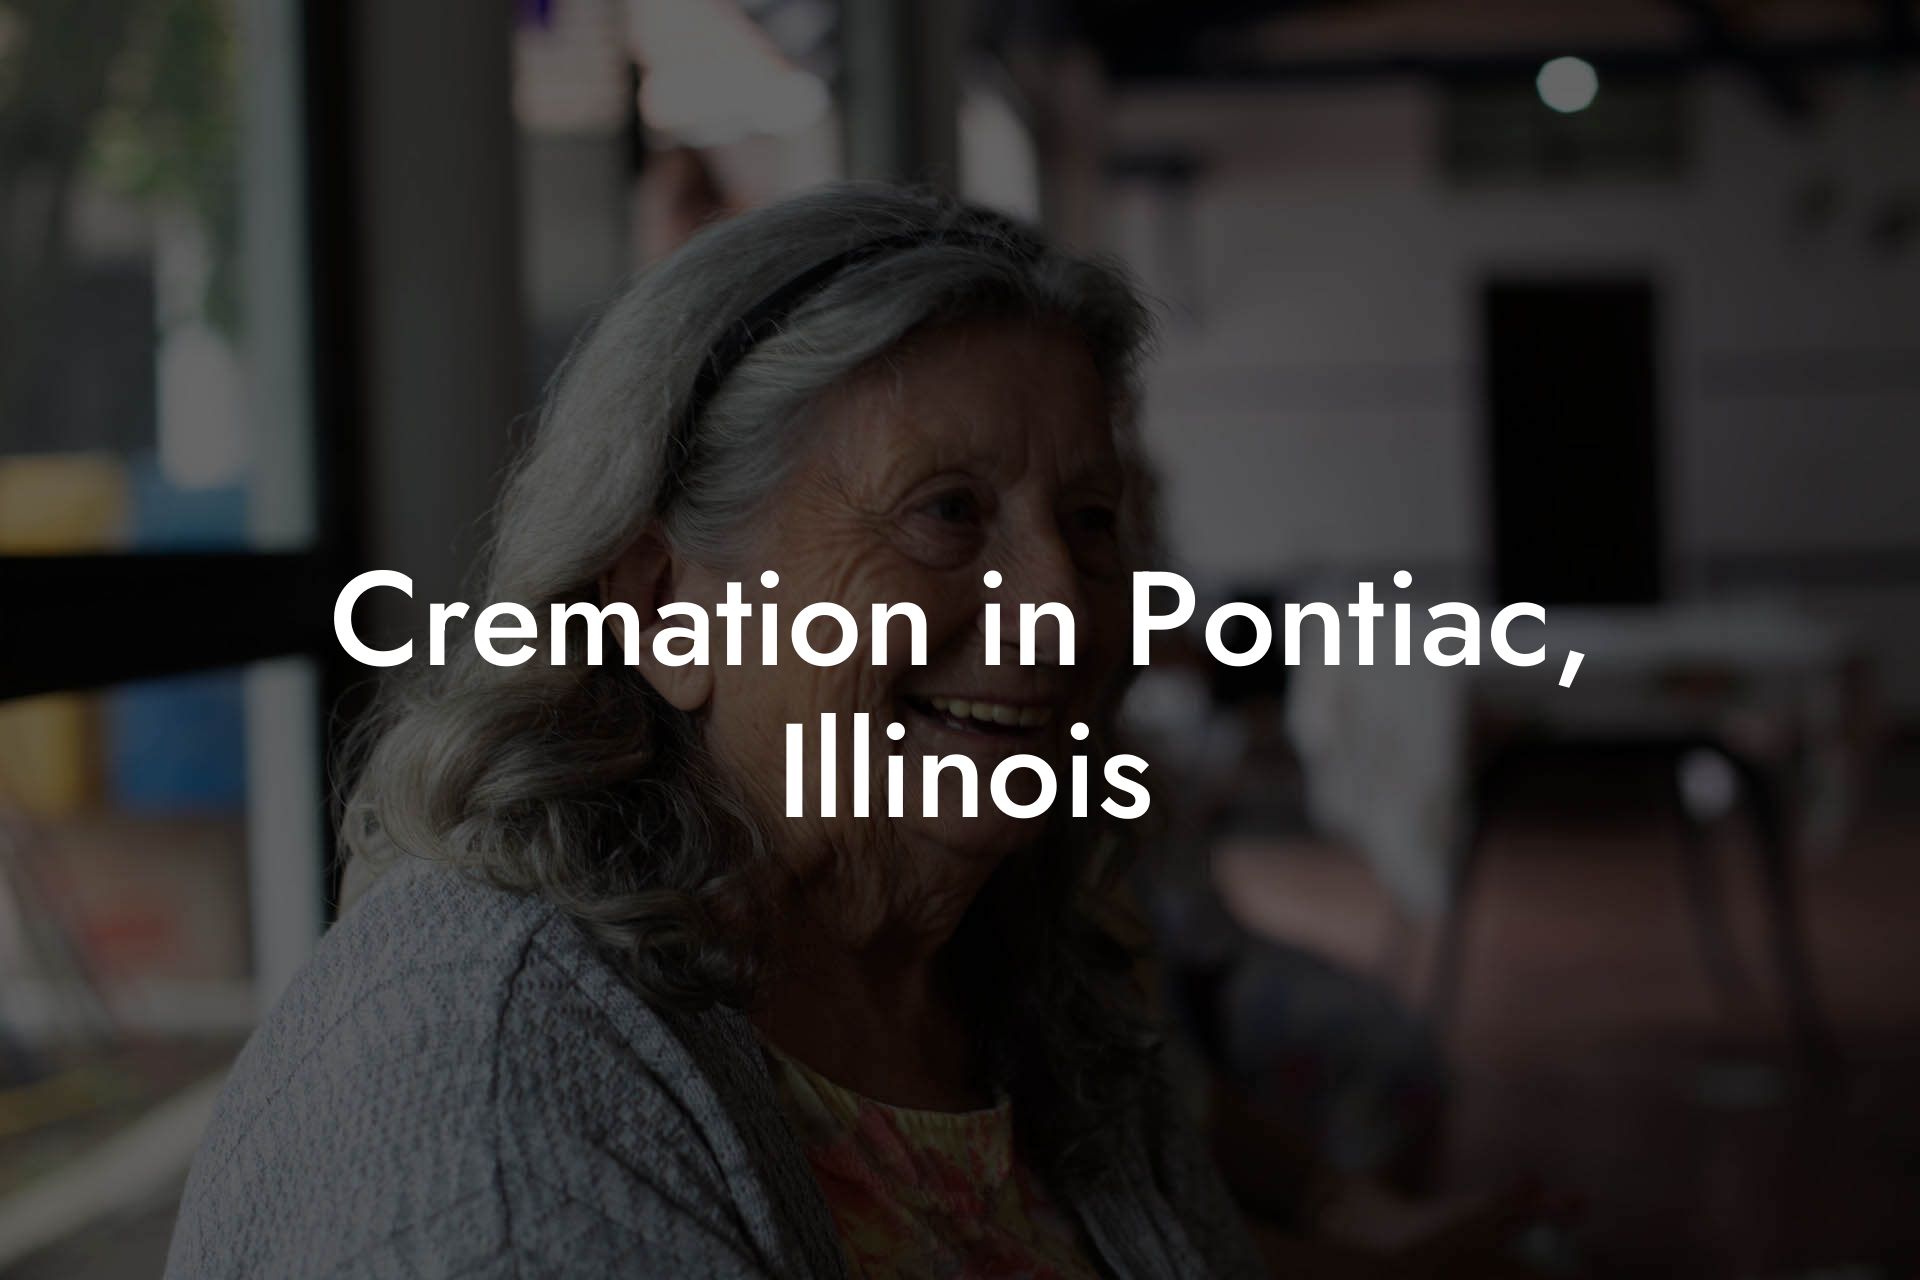 Cremation in Pontiac, Illinois